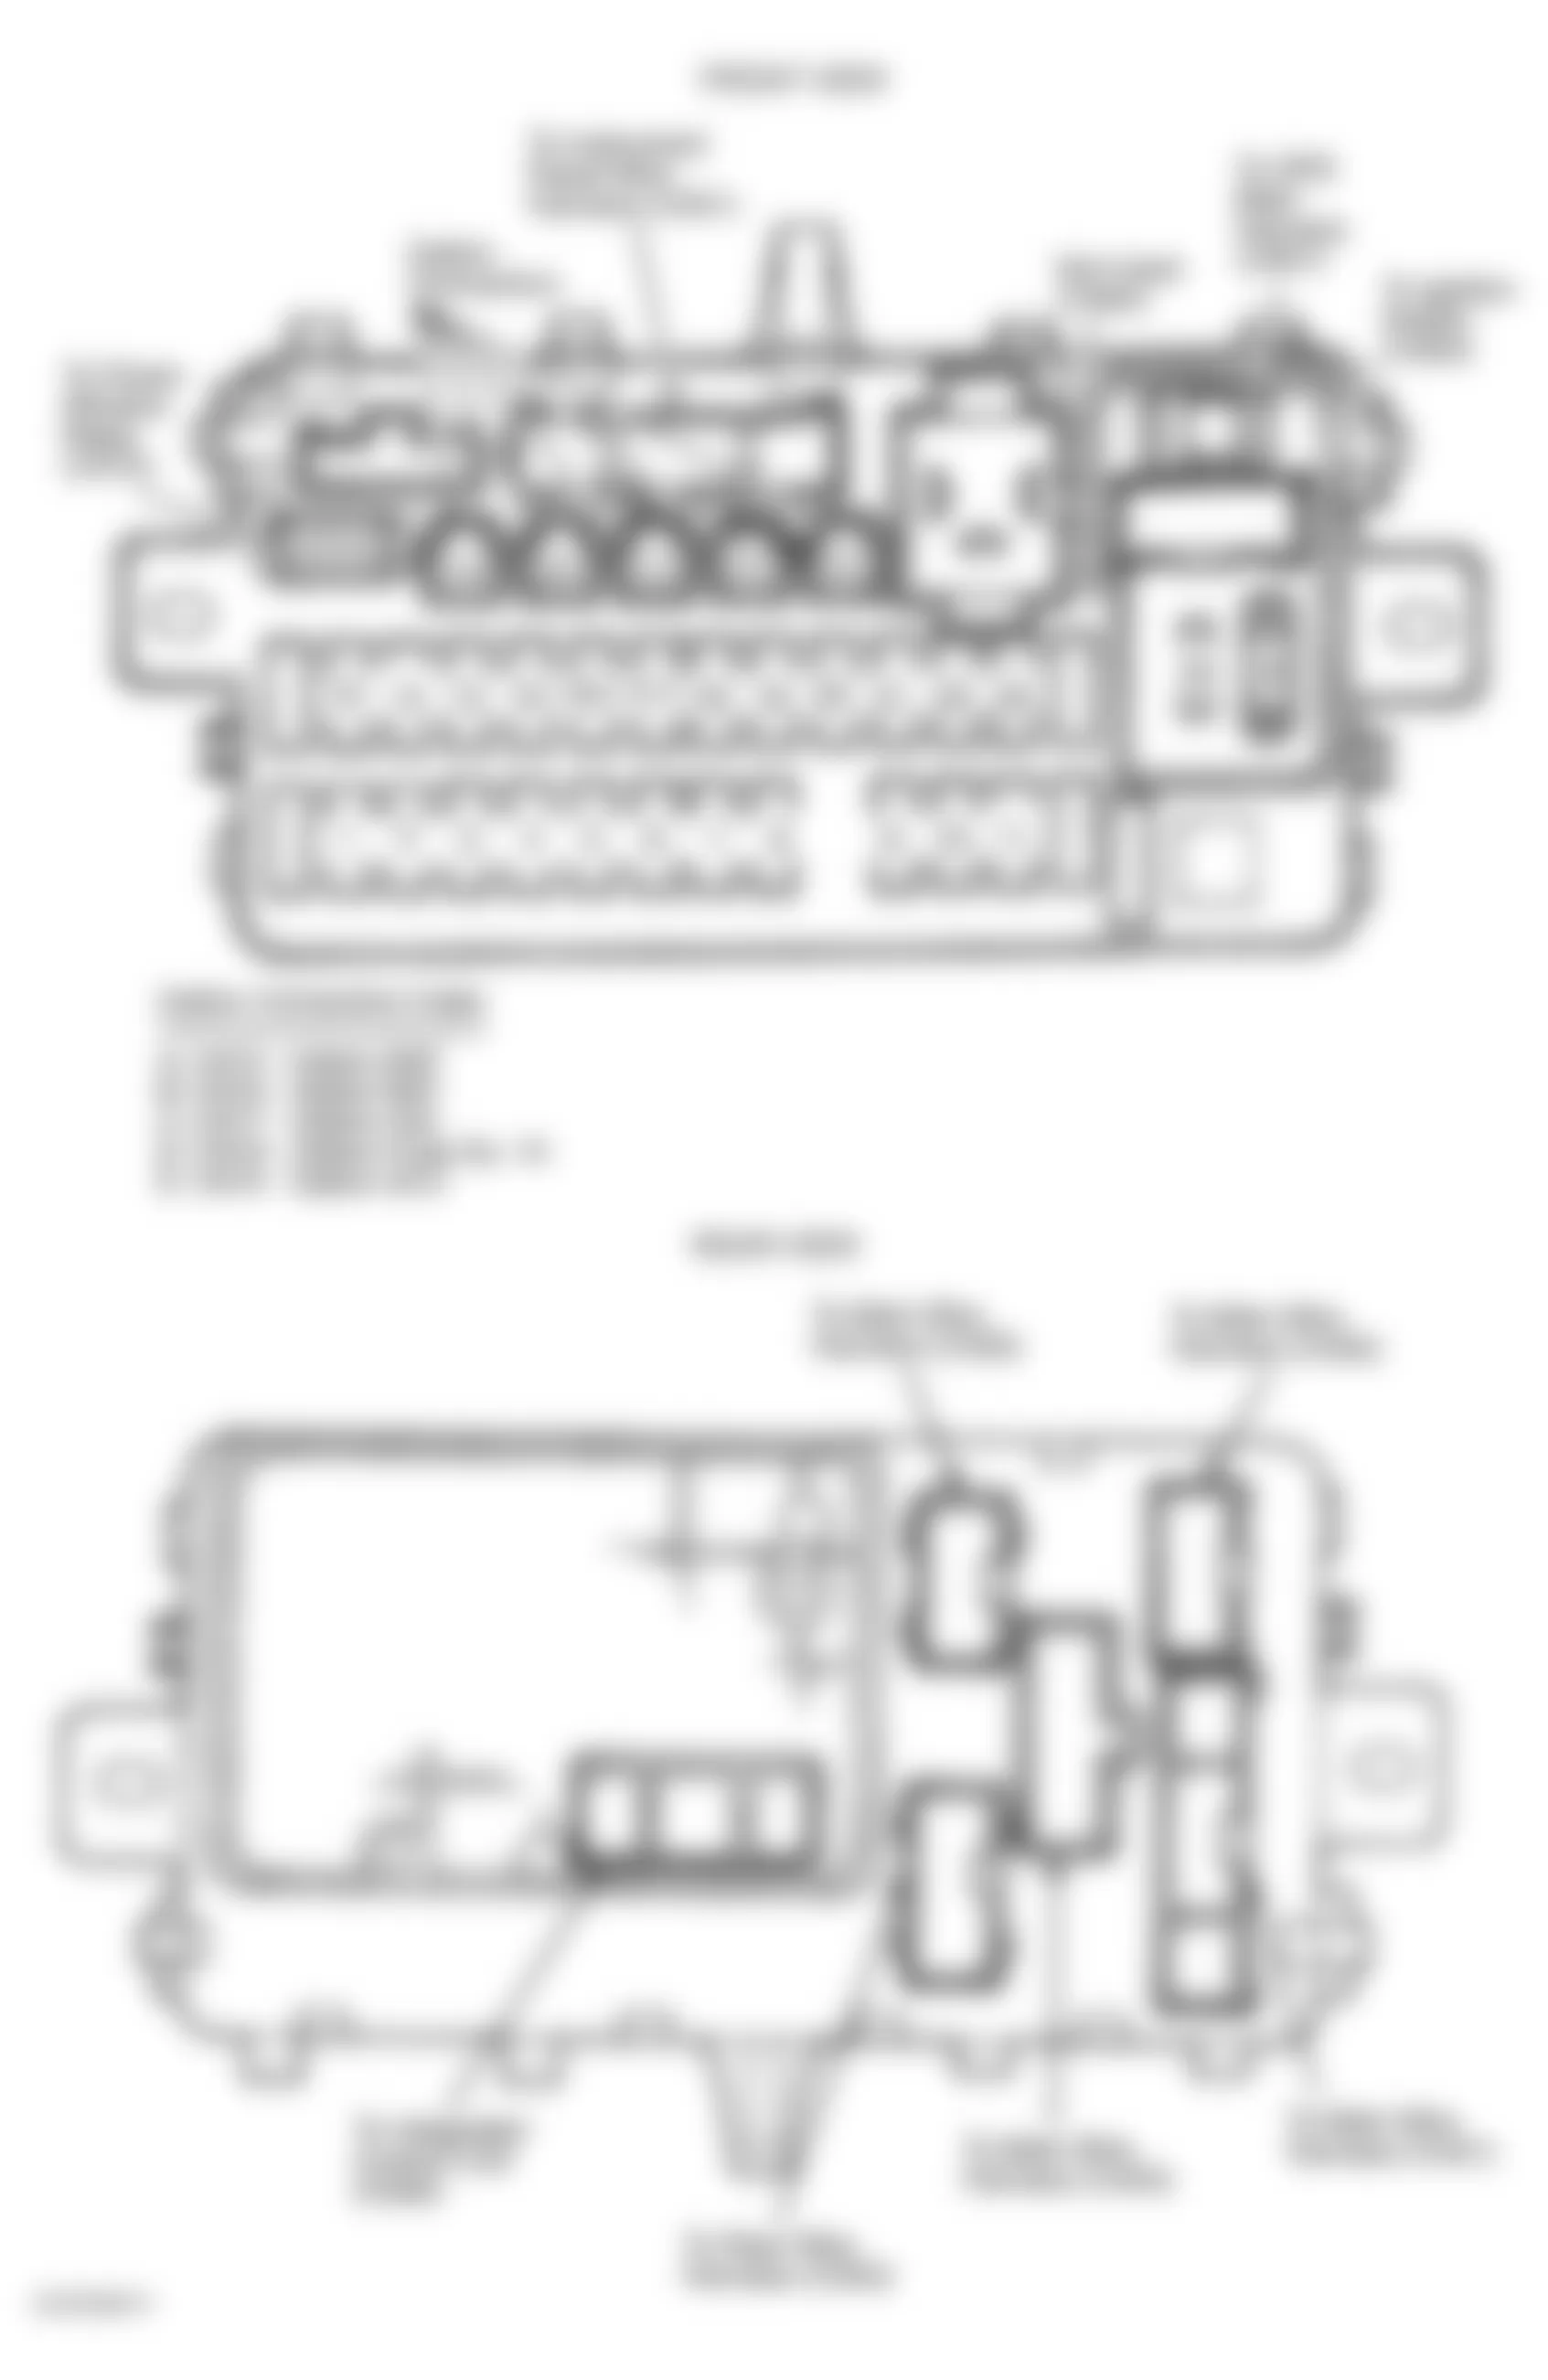 Honda Civic del Sol S 1993 - Component Locations -  Identifying Under-Dash Fuse/Relay Box Components (1994-95 Civic Del Sol)